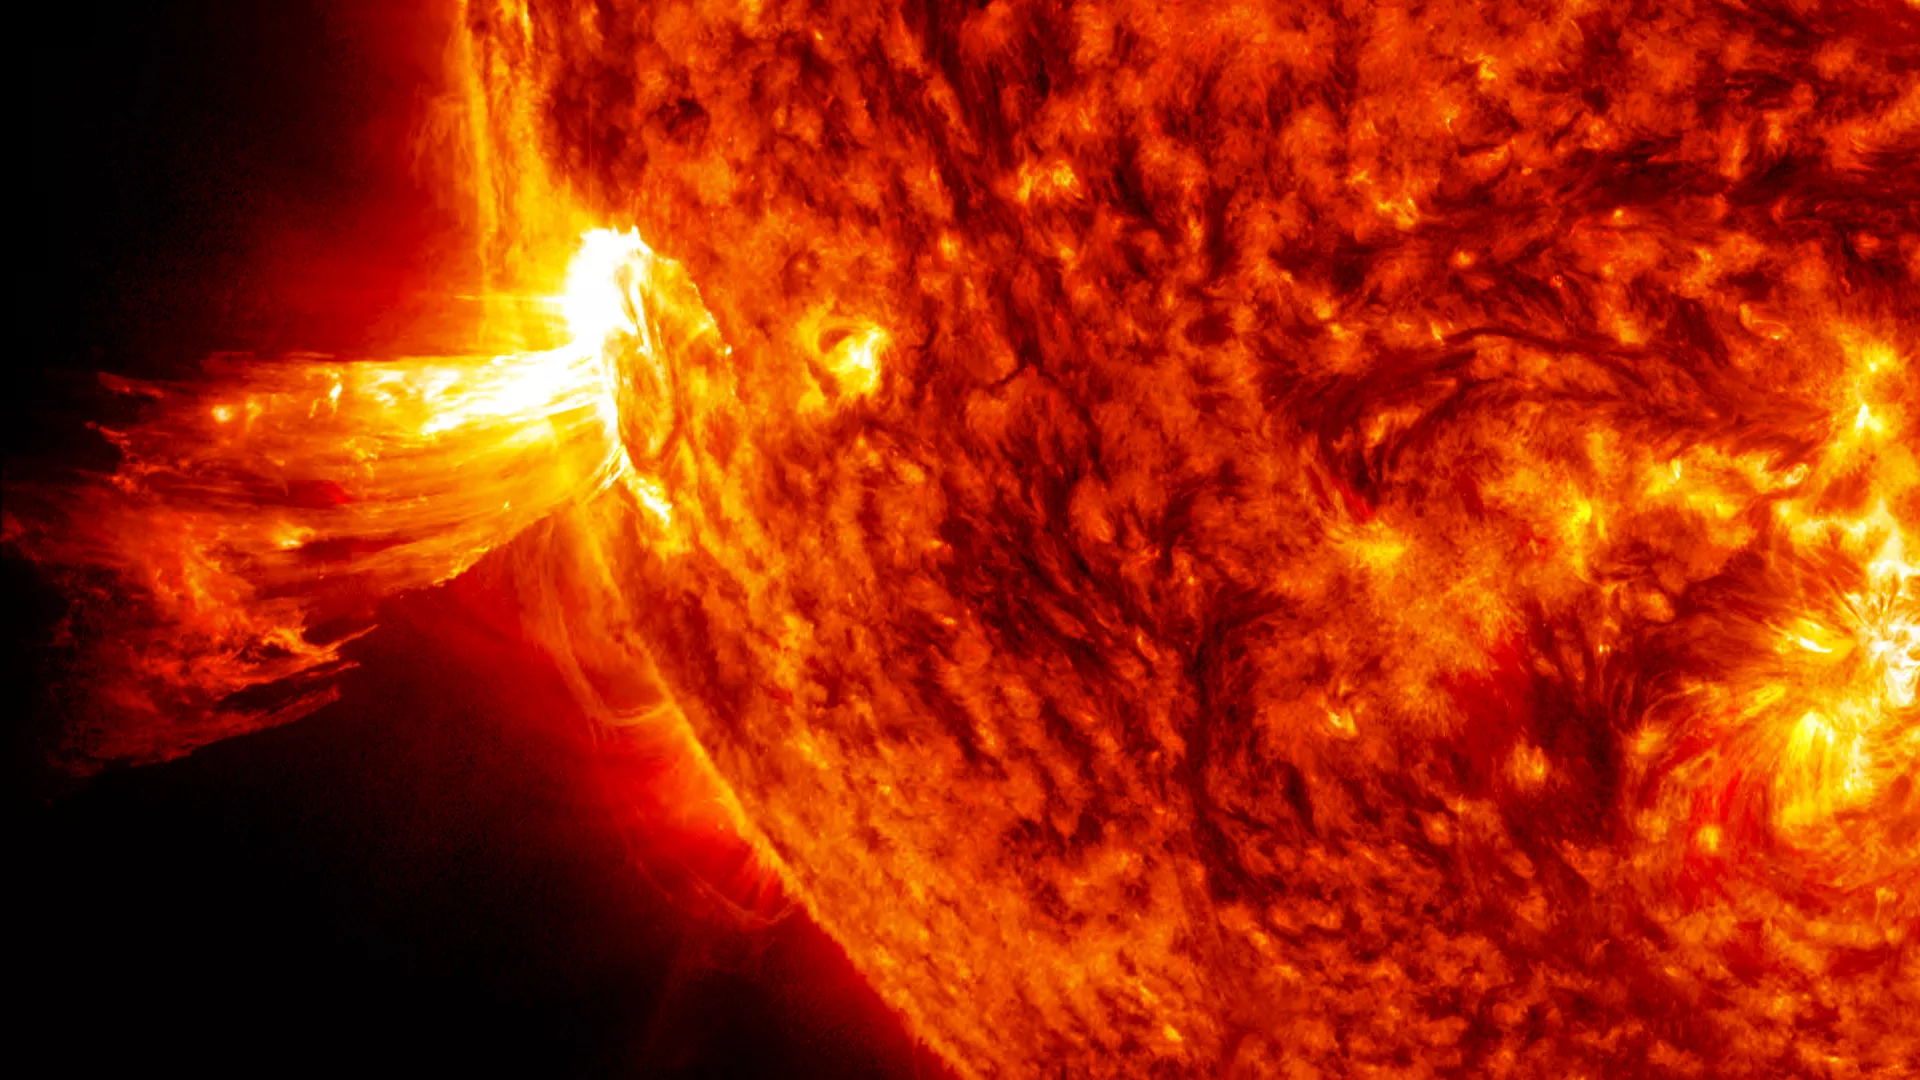 Image A coronal mass ejection